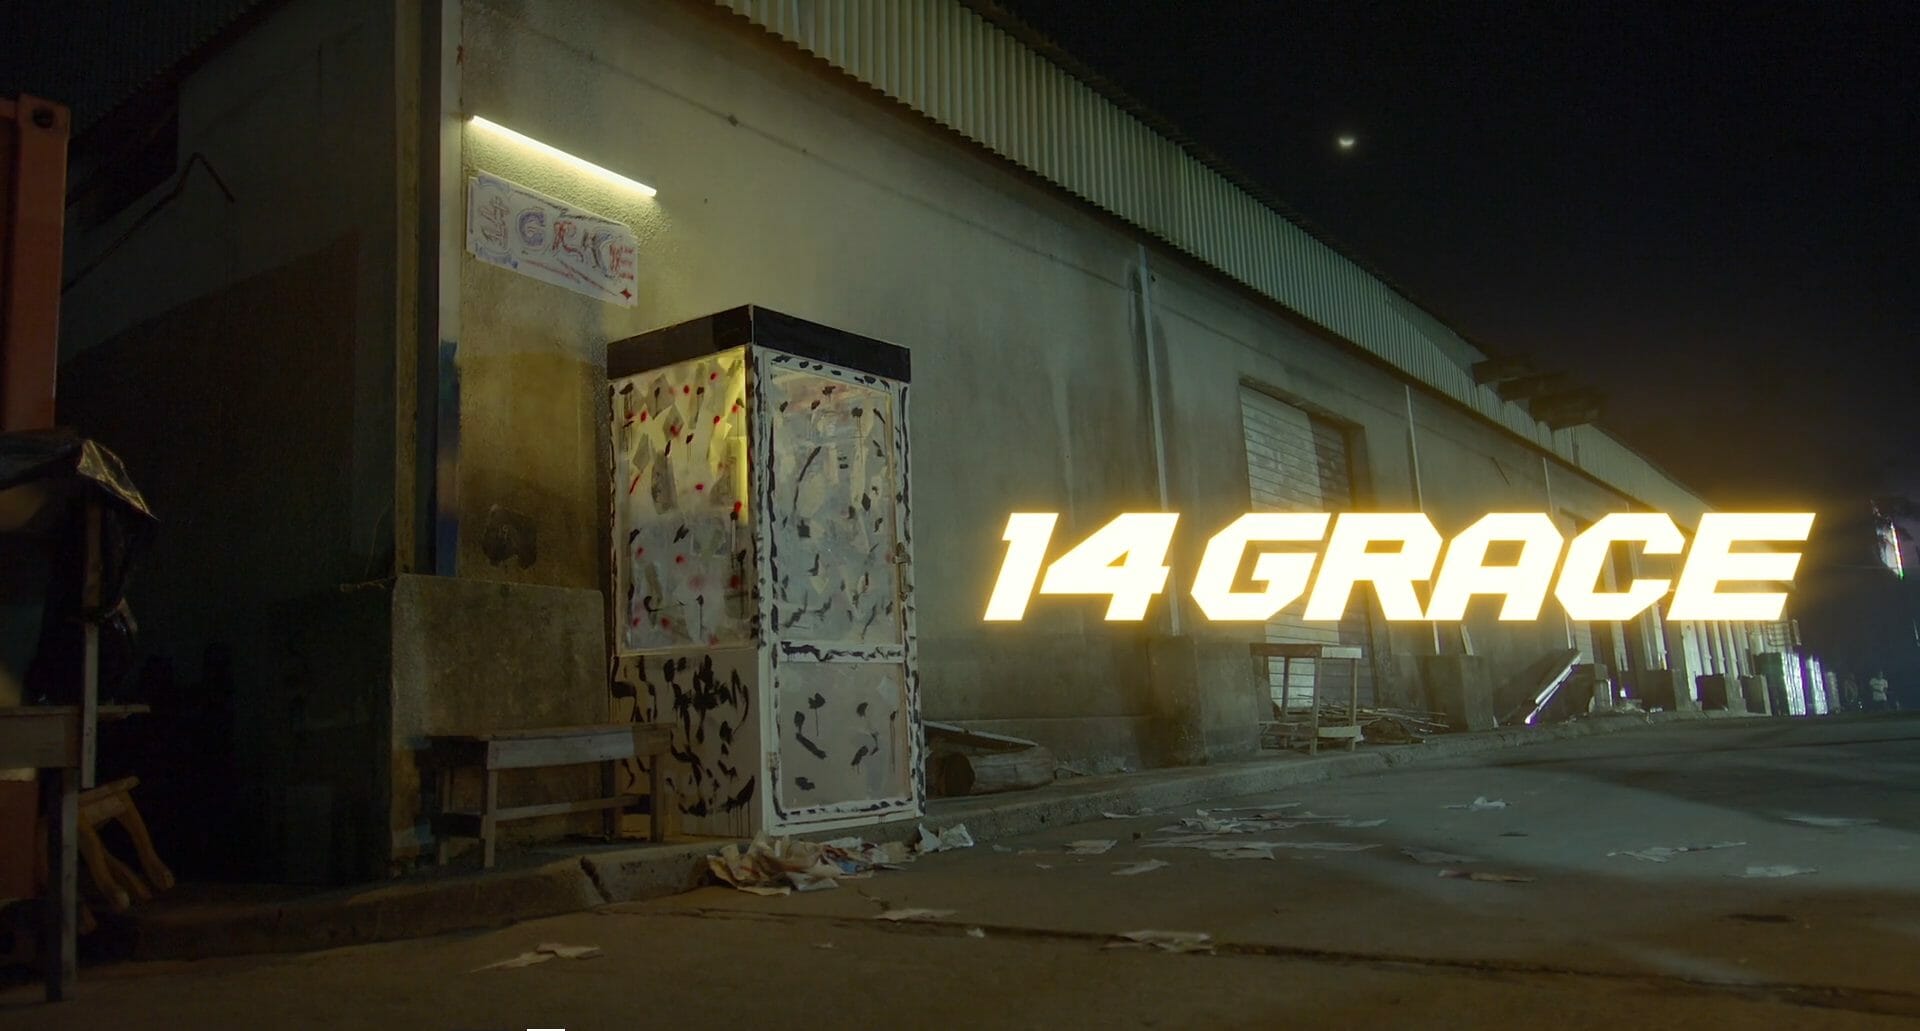 14 grace  – DK REGAN – Music Video